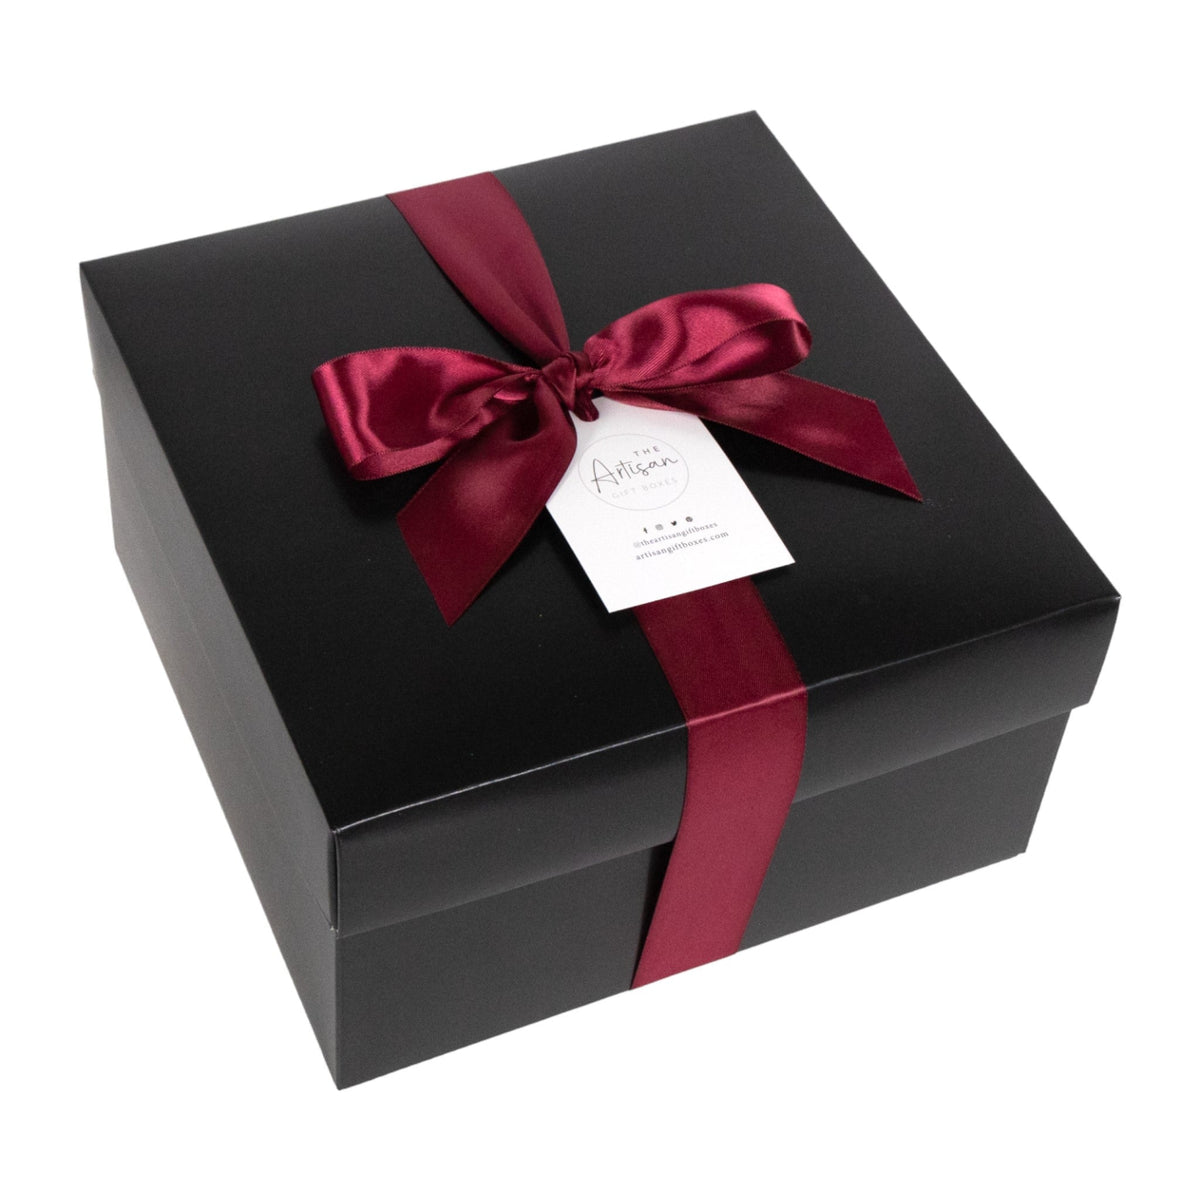 Texas Treats  Buy Custom Gift Boxes & Texas Foods Online